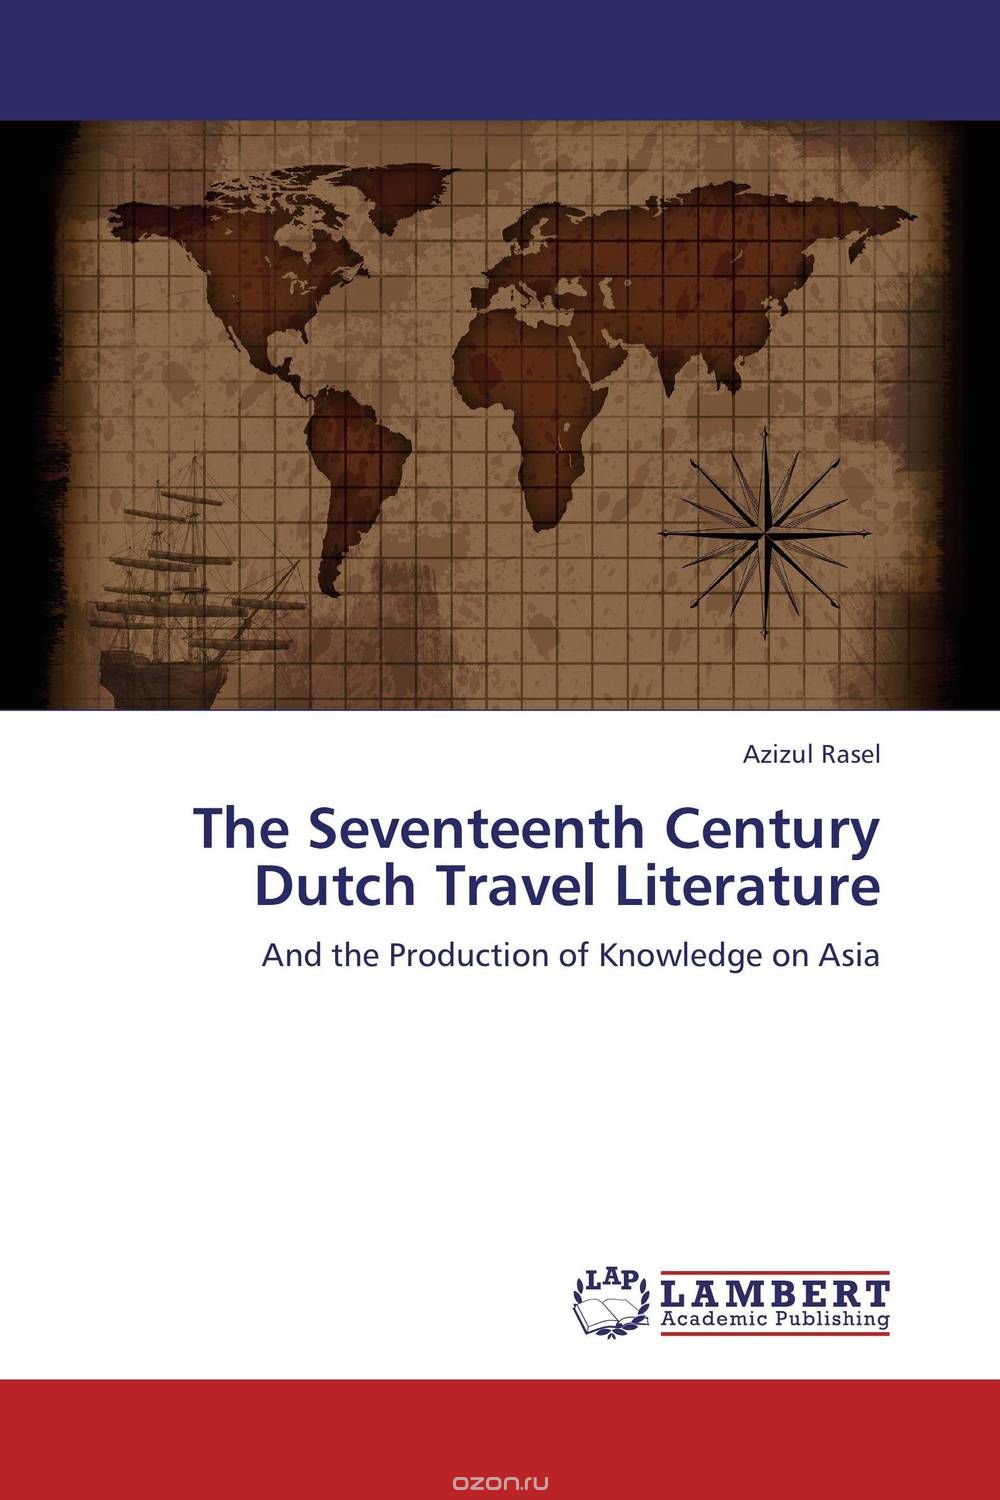 Скачать книгу "The Seventeenth Century Dutch Travel Literature"